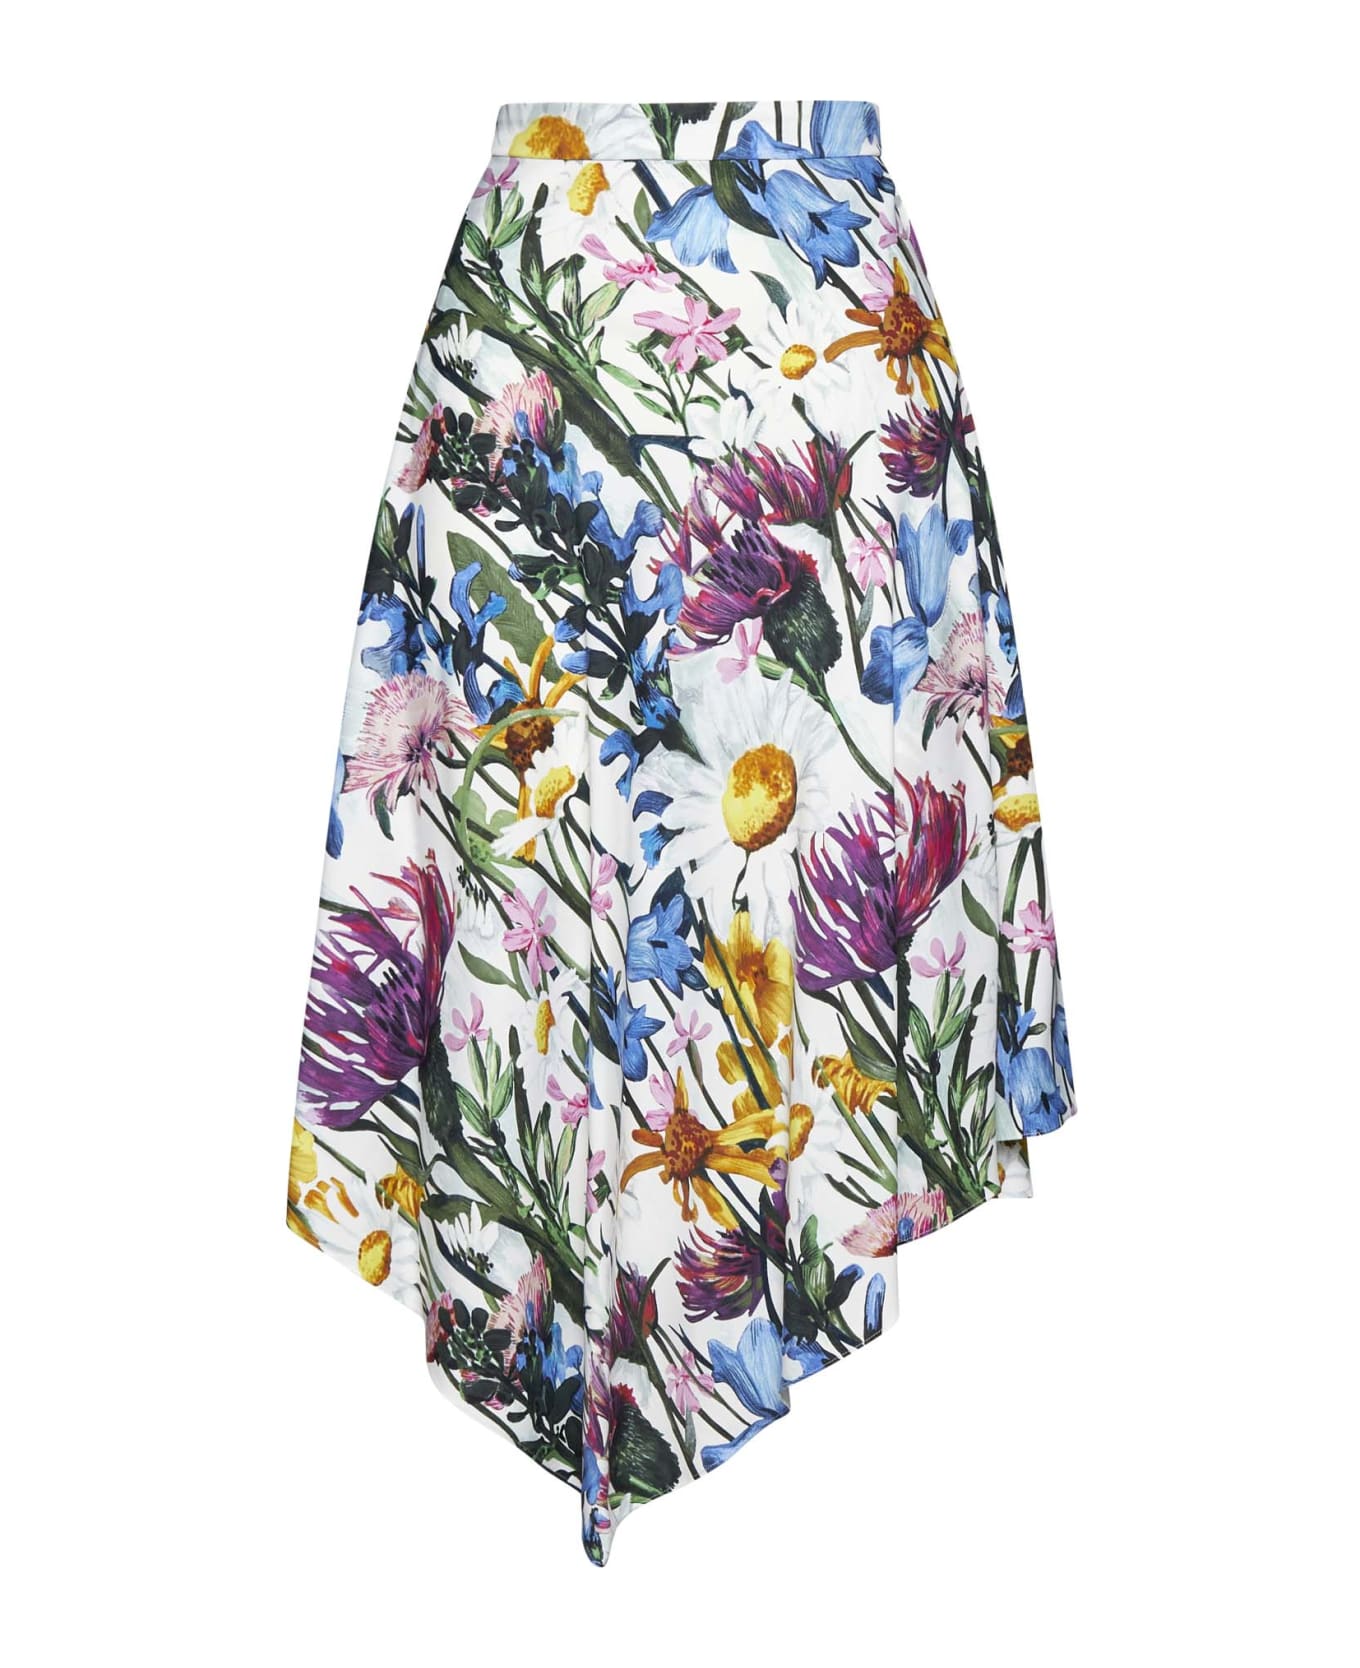 Stella McCartney Rewild Floral Print Skirt - Multicolor